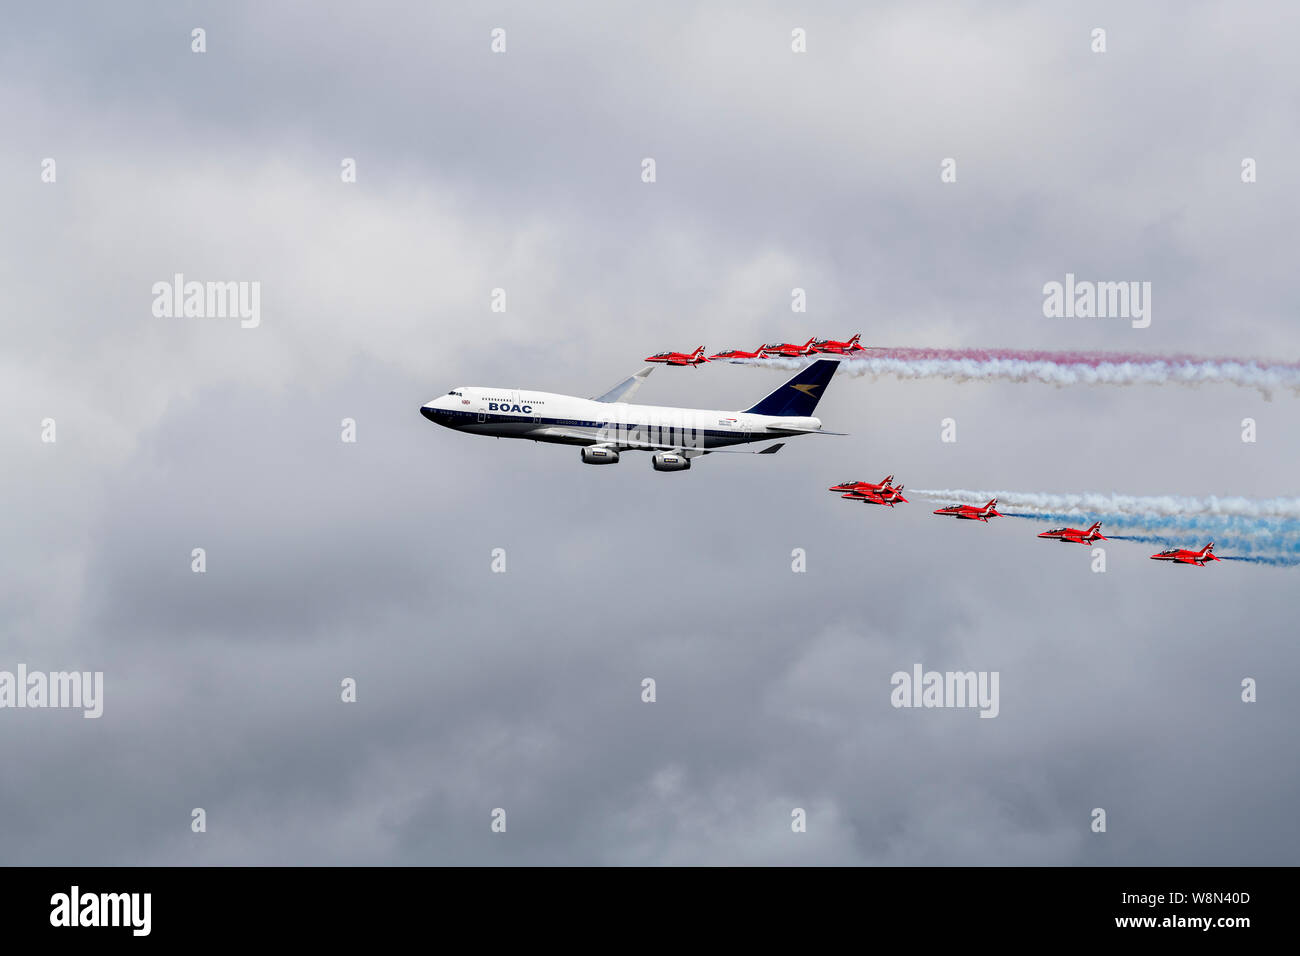 British Airways and the Red Arrows Celebrate British Airway's Centenary. Stock Photo